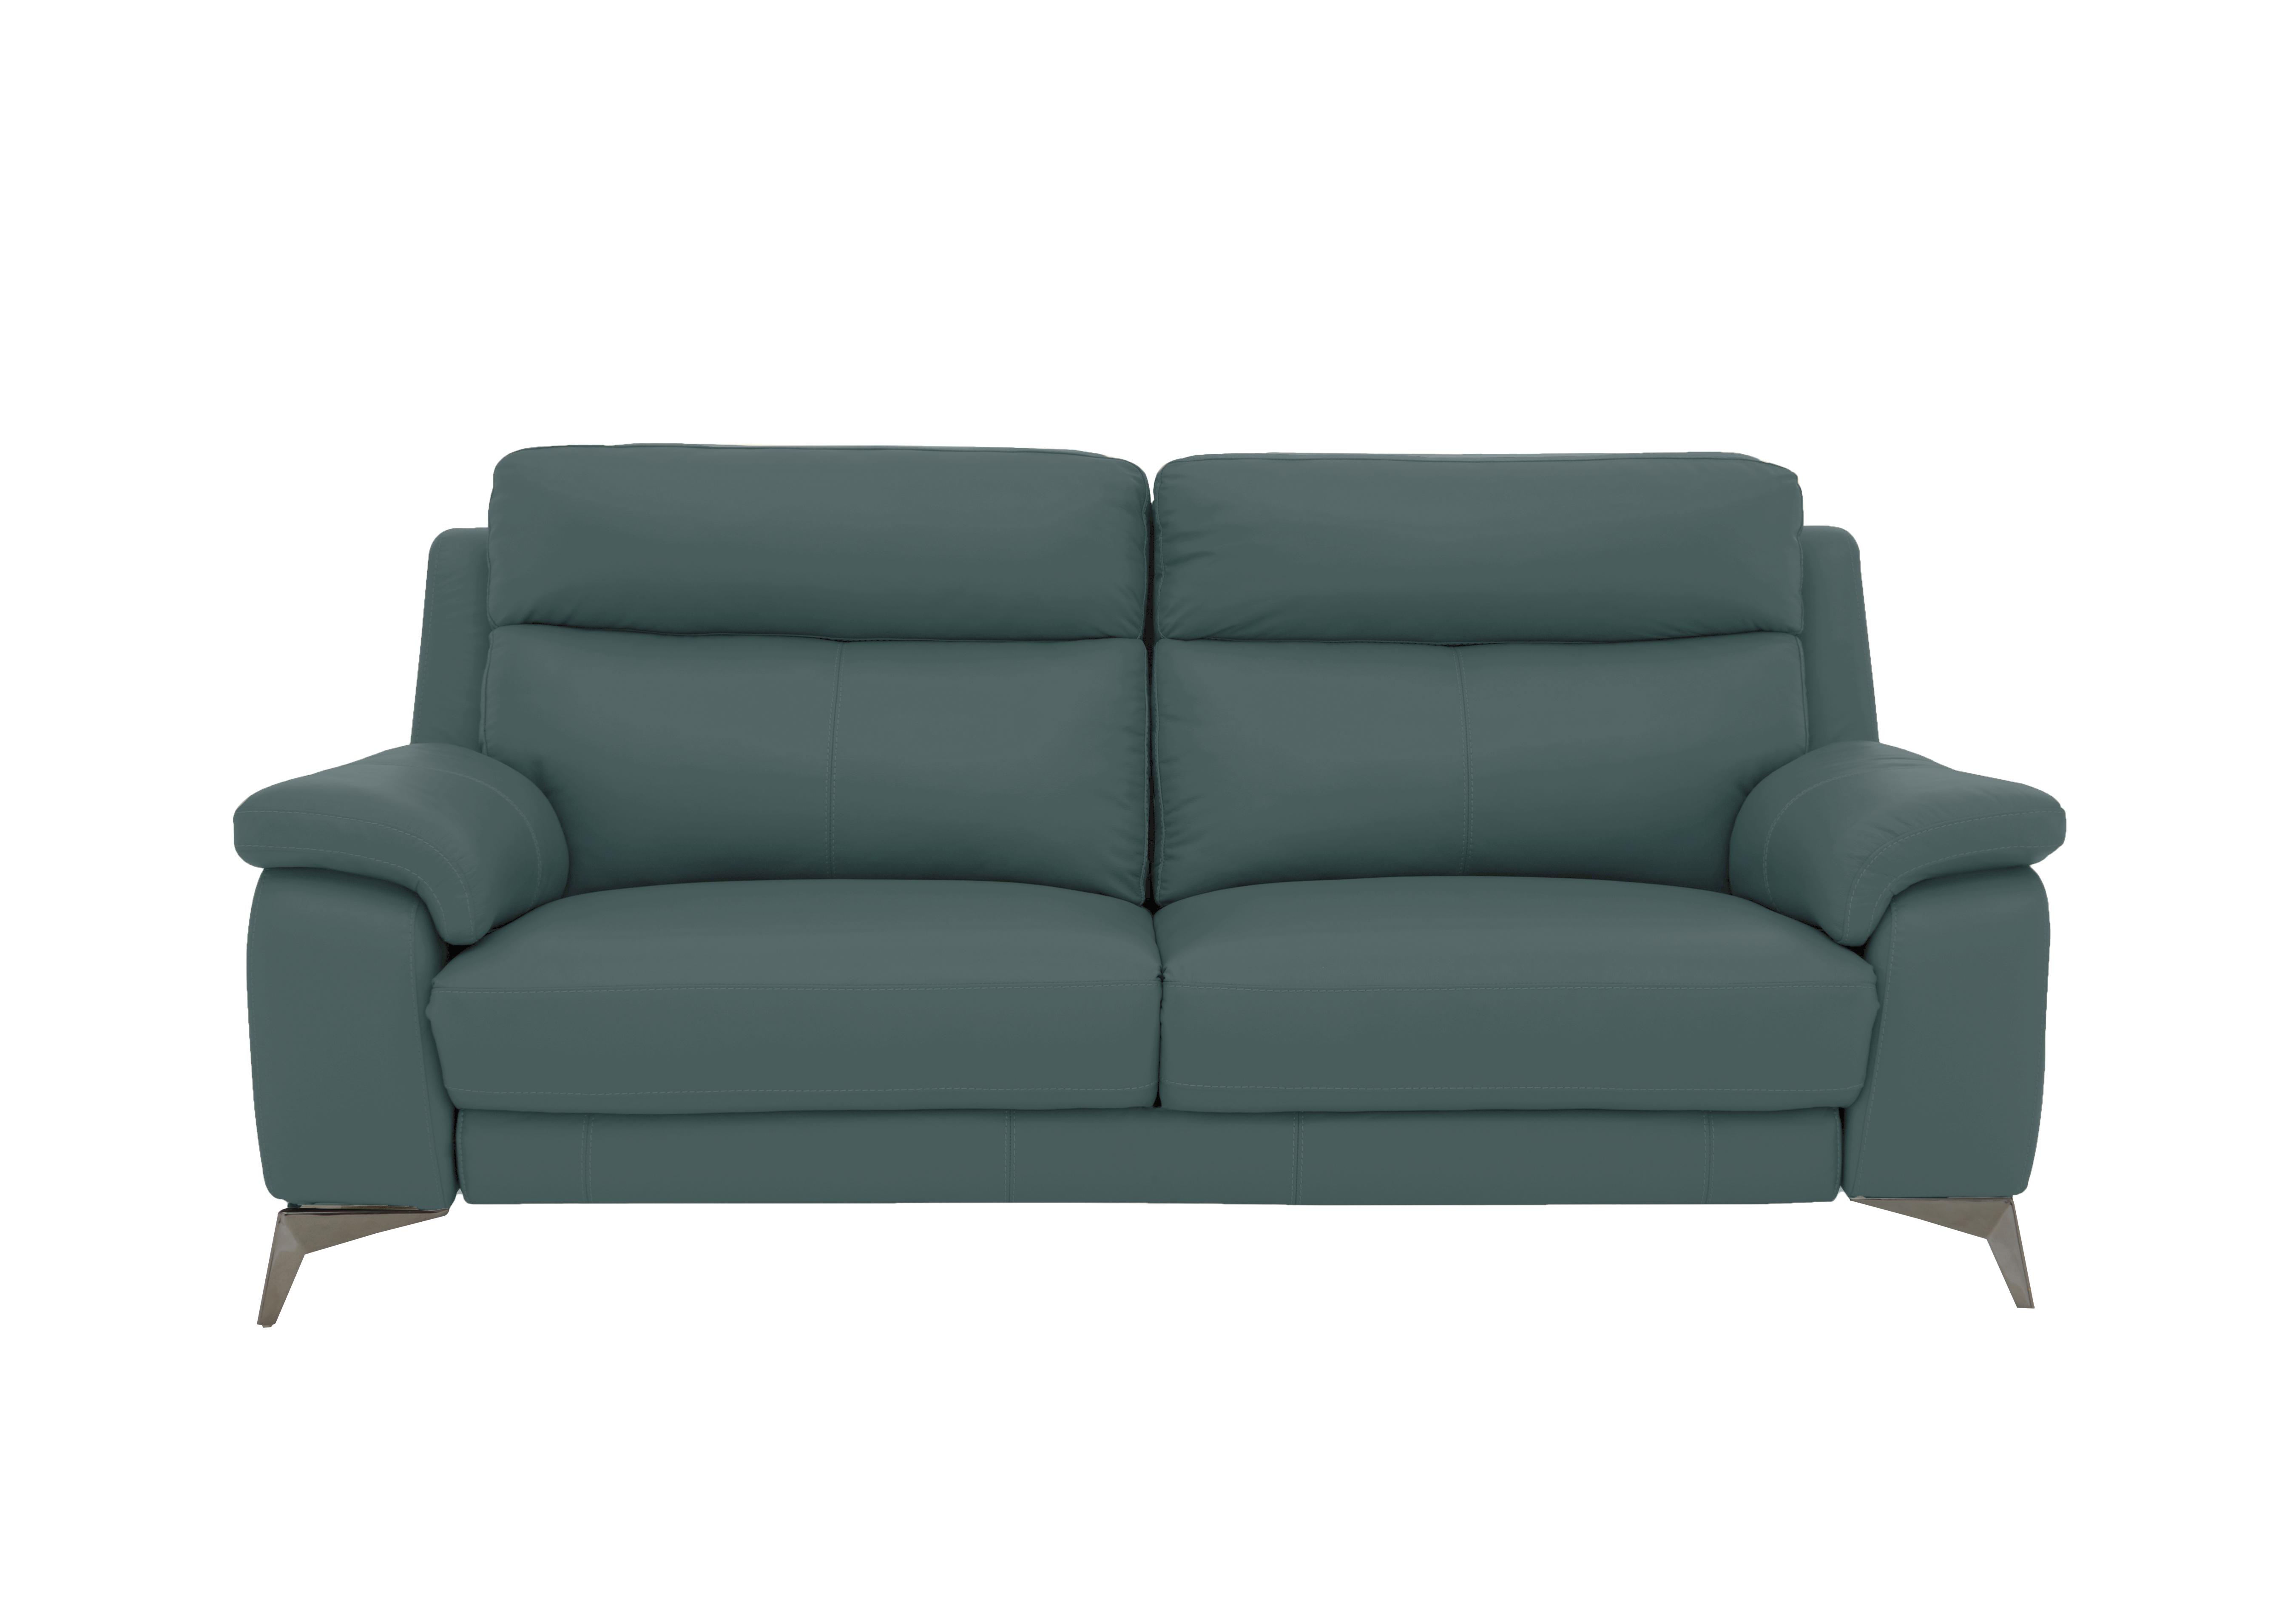 Missouri 3 Seater Leather Sofa in Bv-301e Lake Green on Furniture Village